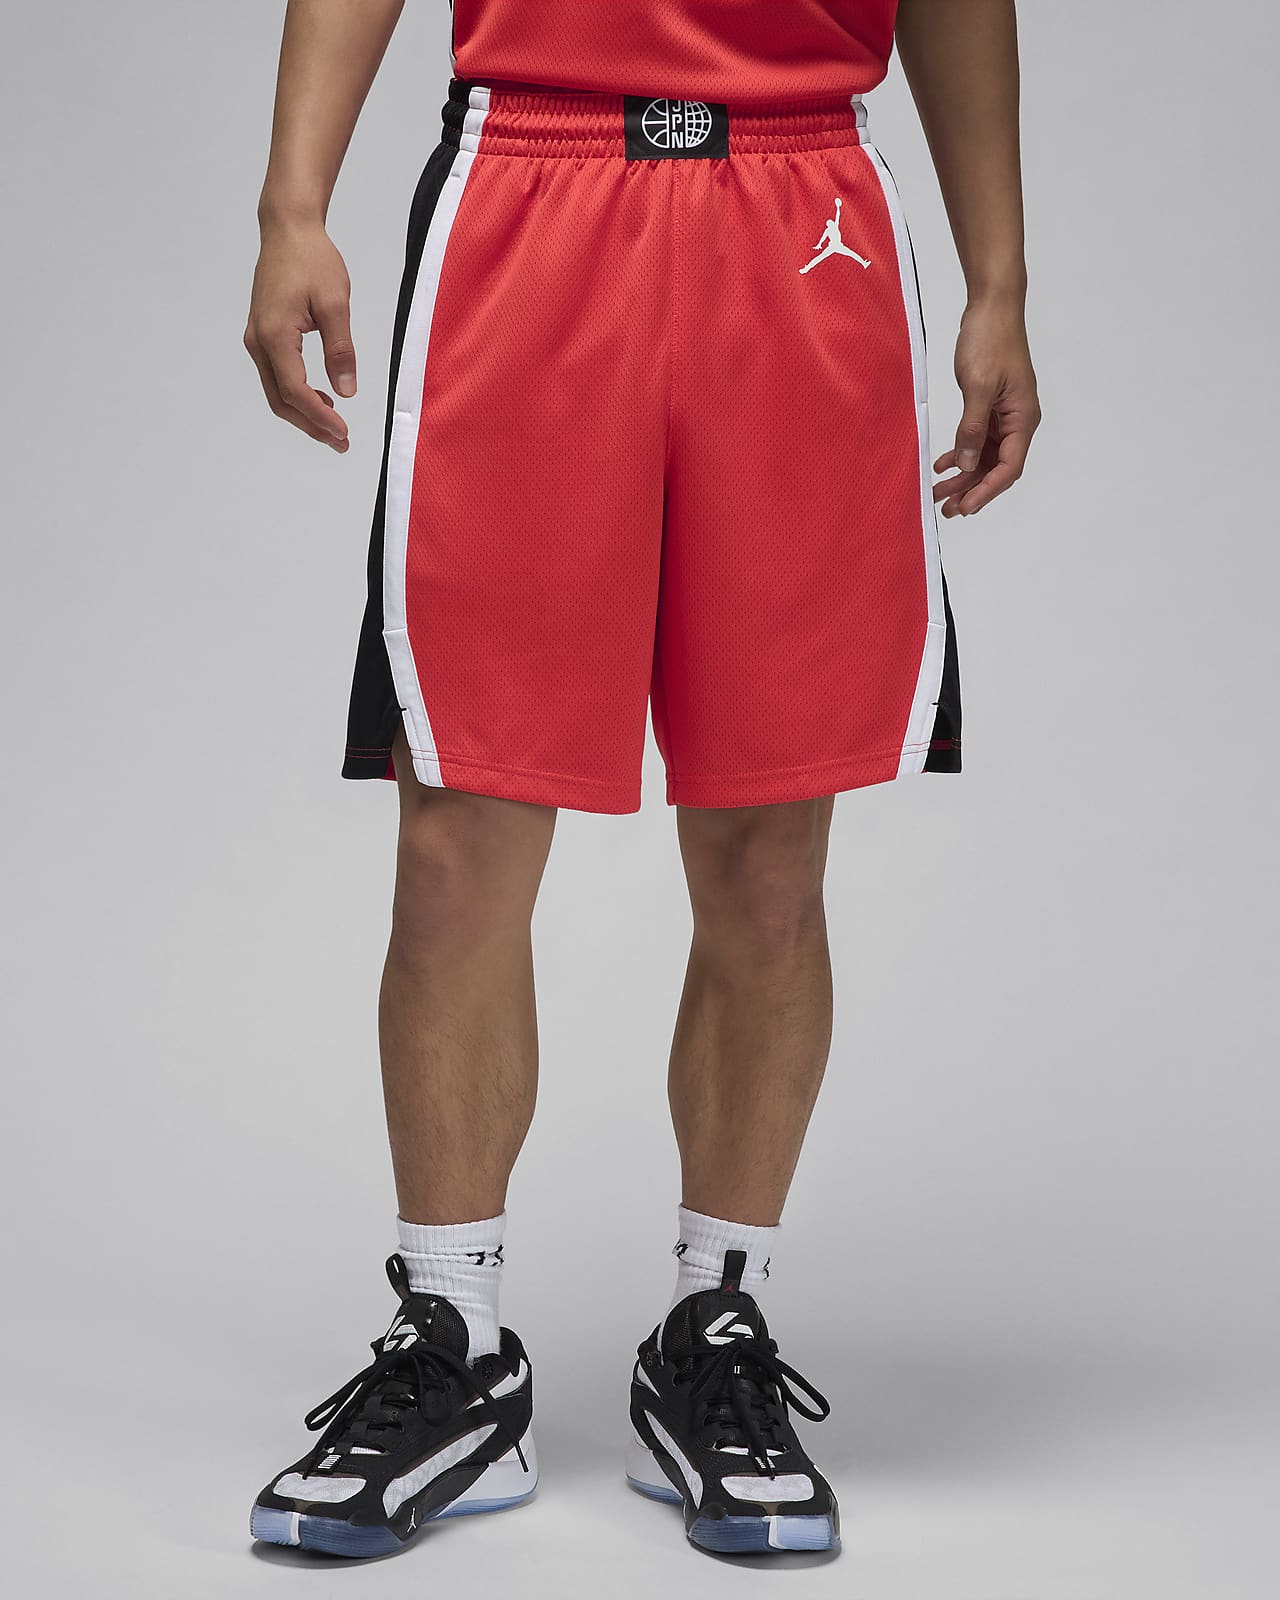 Japan Limited Road Men's Nike Basketball Shorts